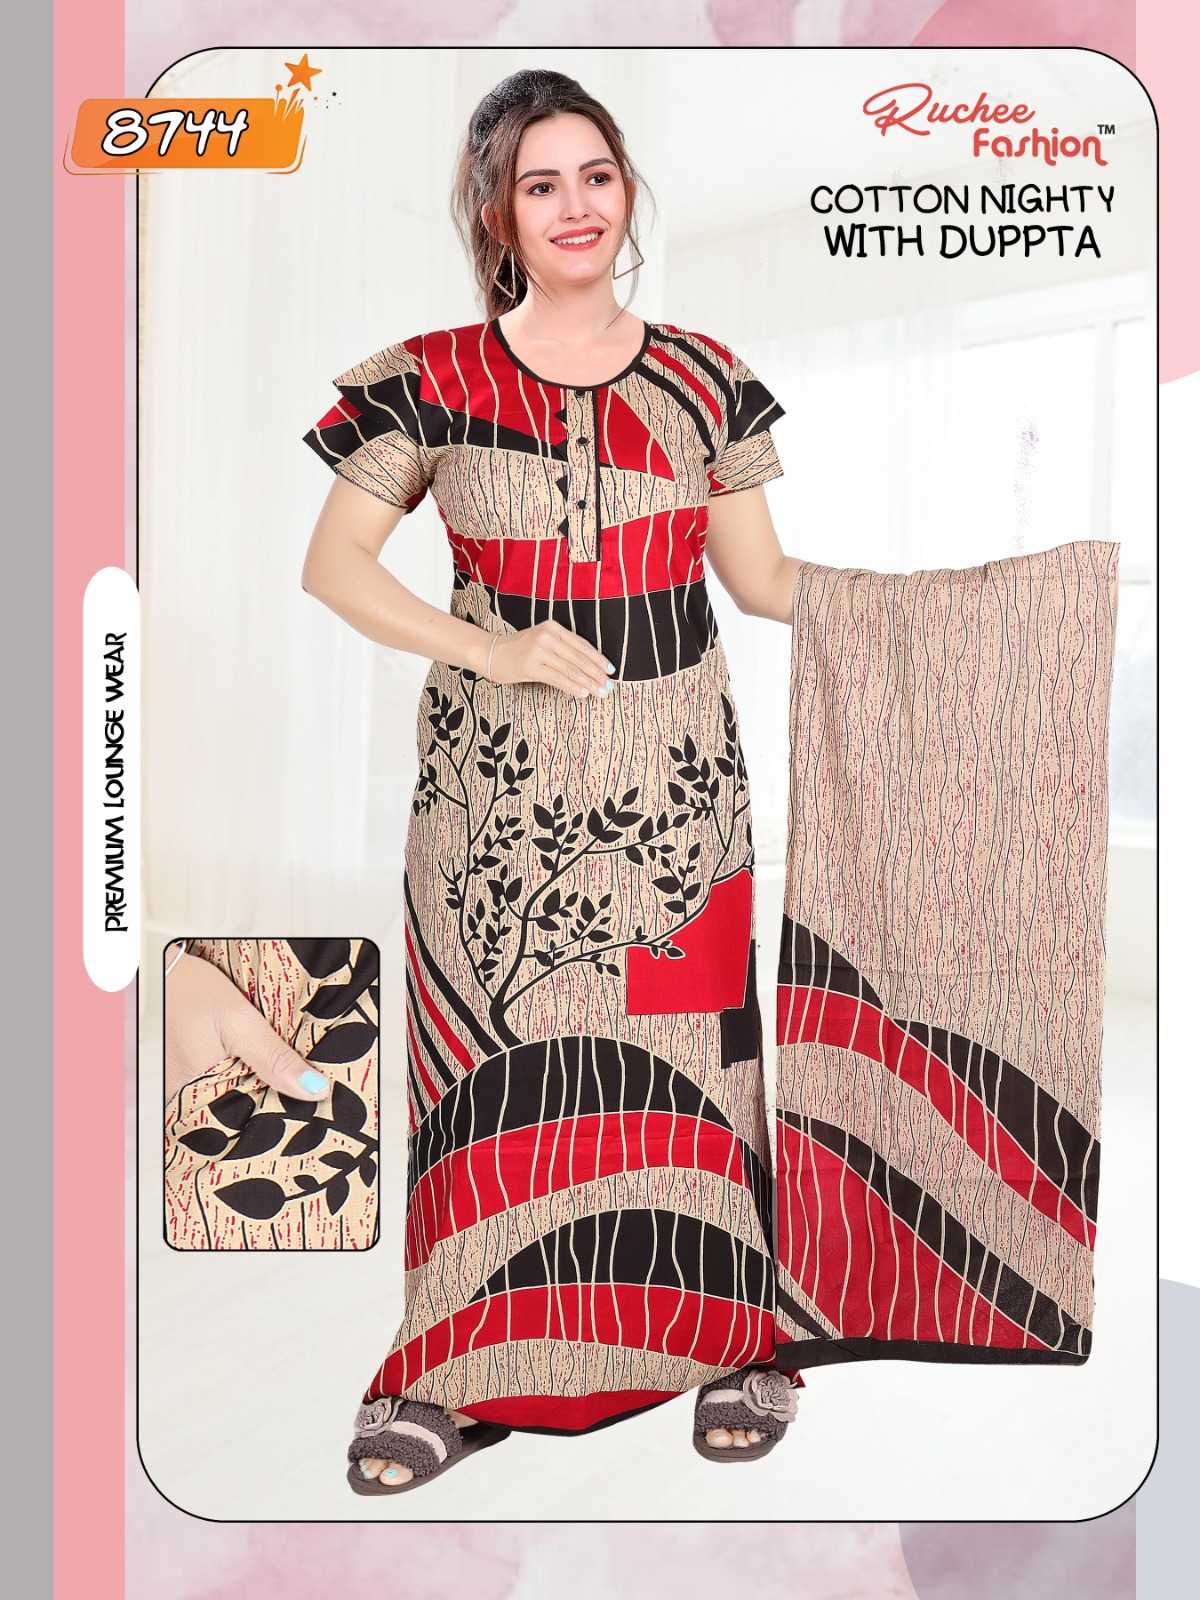 ruchee fashion cotton nighty with dupatta 8740-8745 new concept women night wear